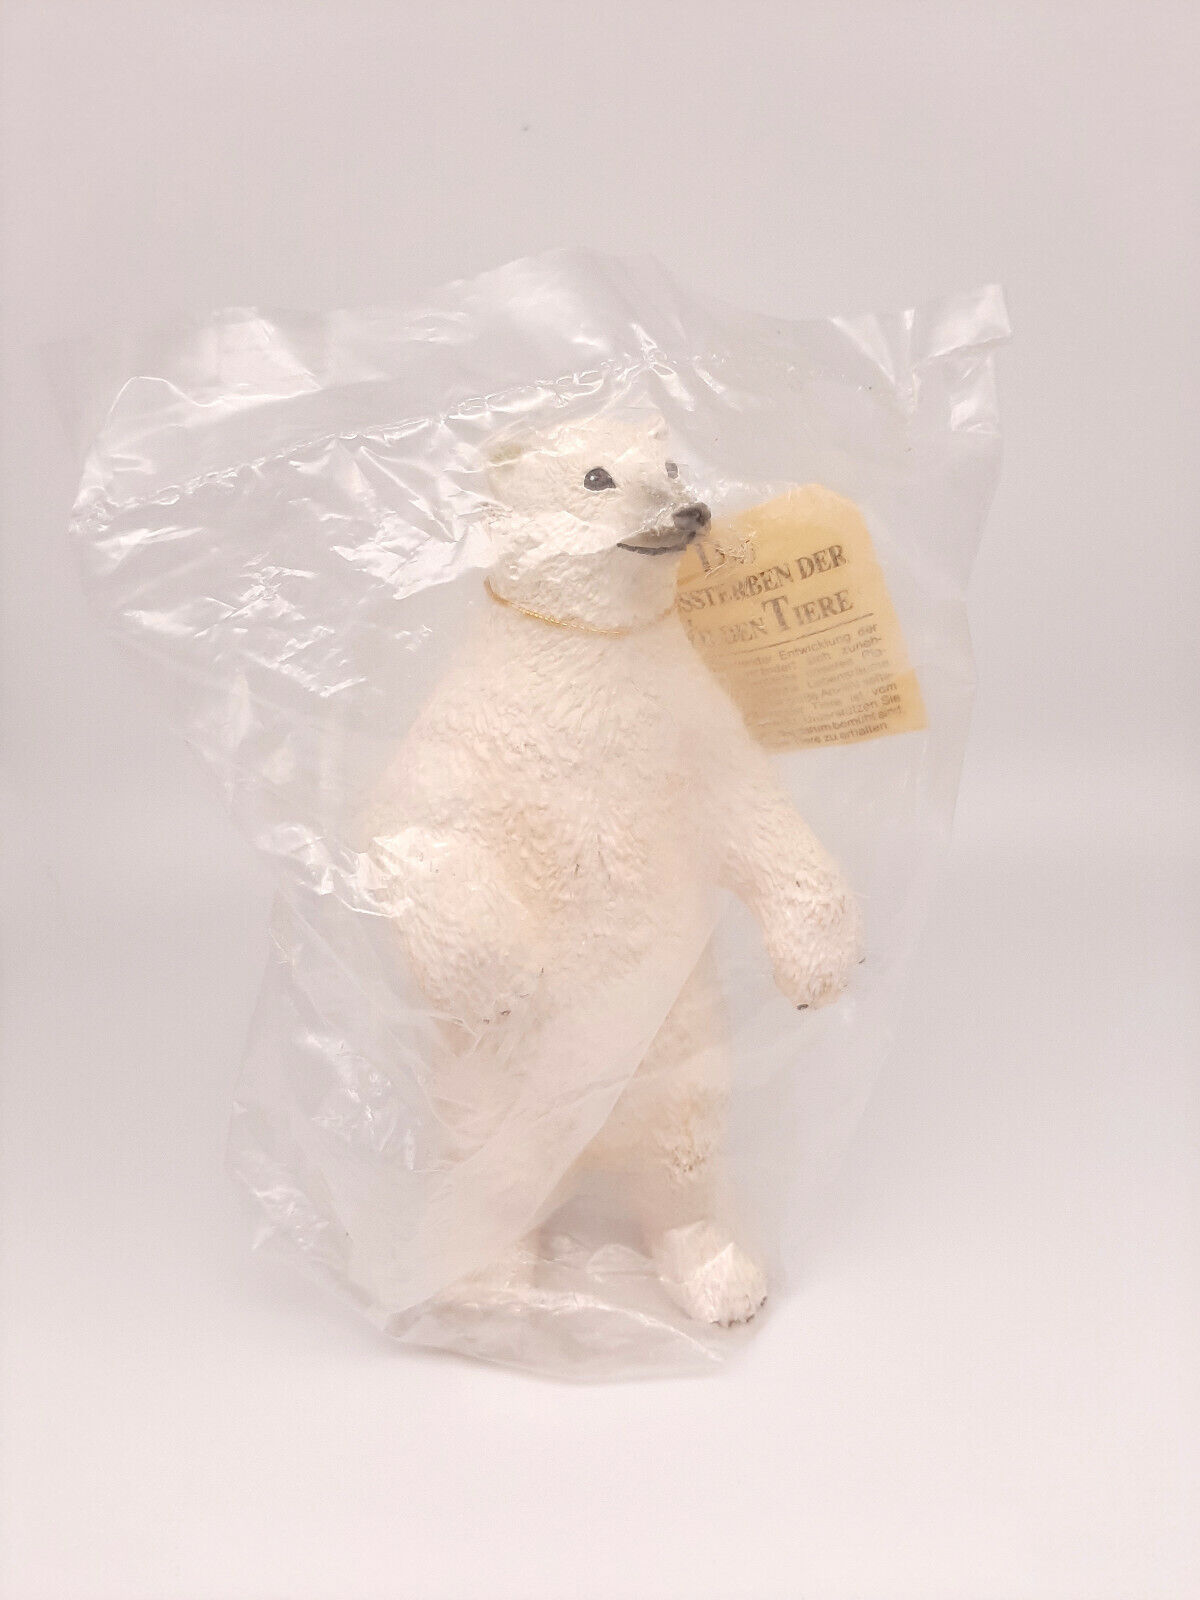 Safari Ltd. *vanishing Wild* Collection, Polar Bear Male, 903003